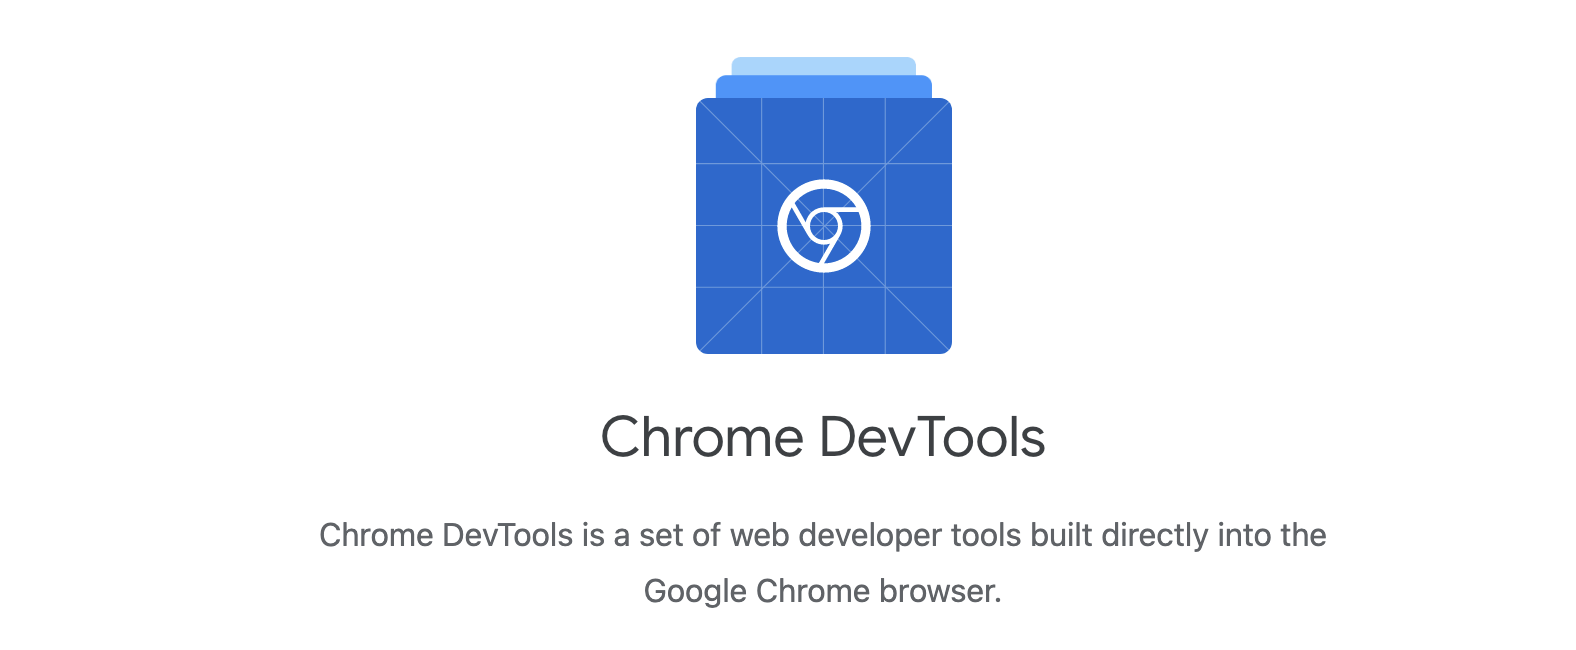 chrome-devtools: a set of web developer tools built directly into the Google Chrome browser